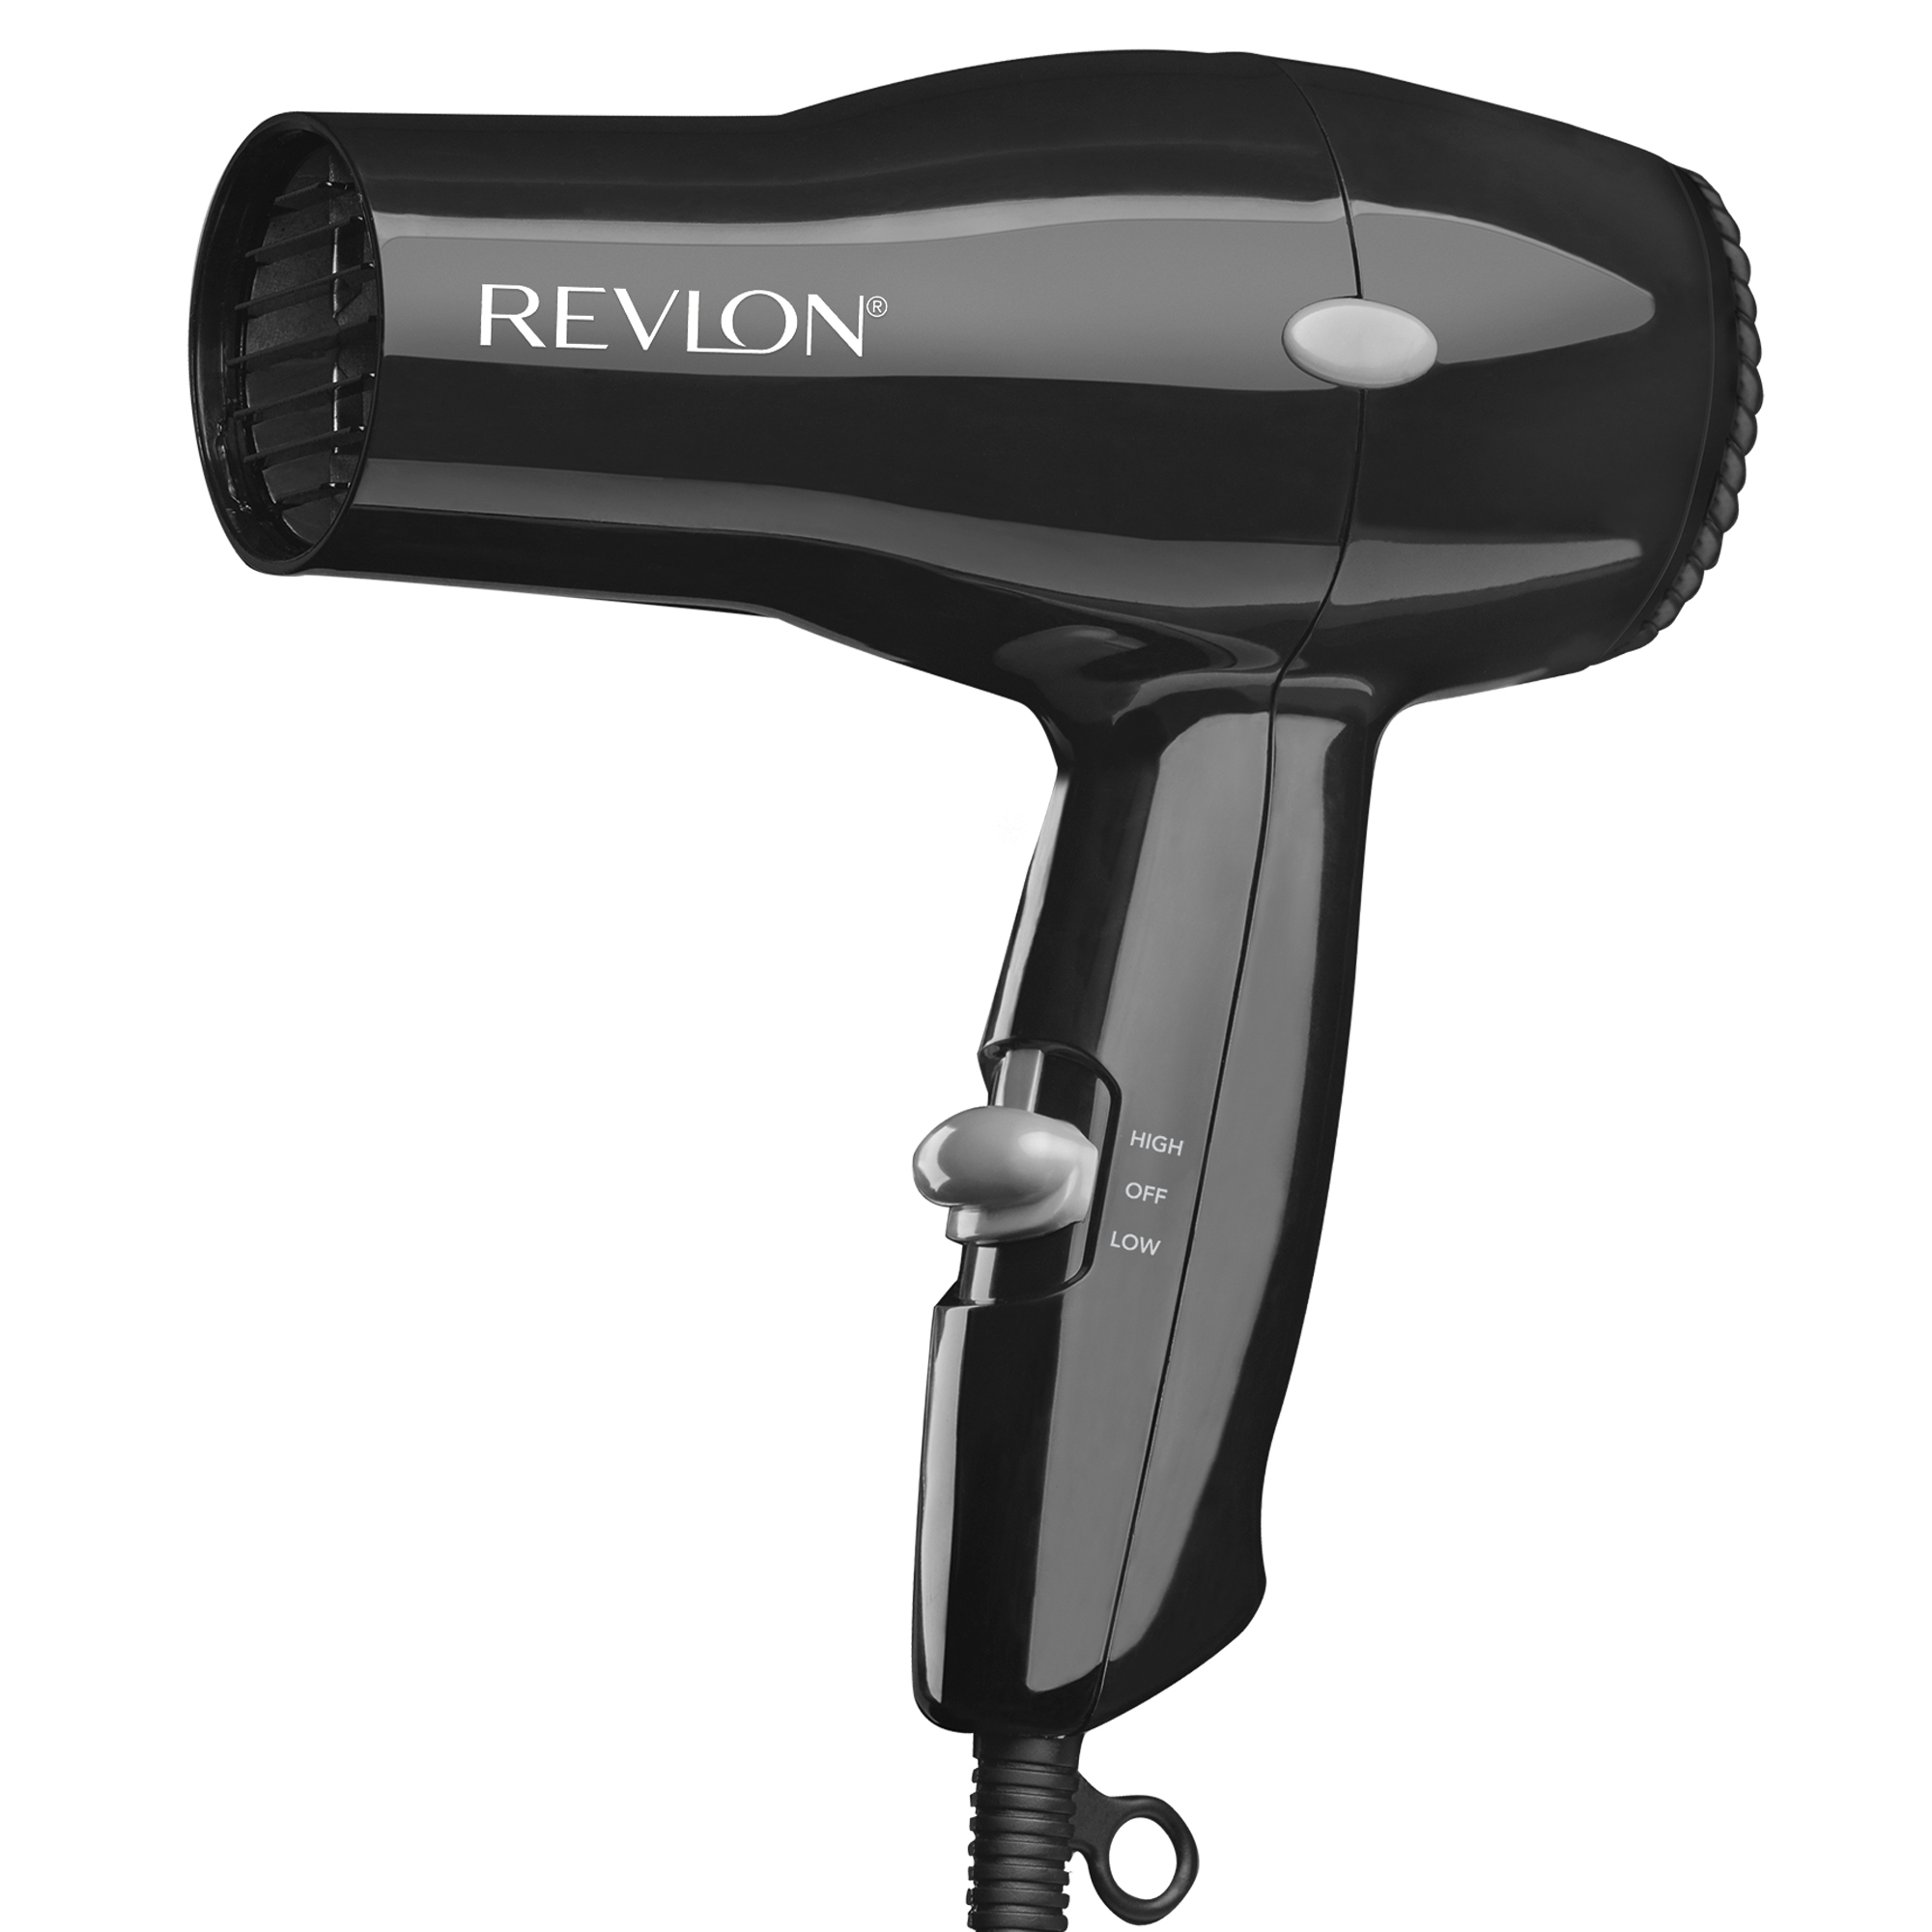 Revlon 1875W Compact Hair Dryer, Black - image 1 of 5